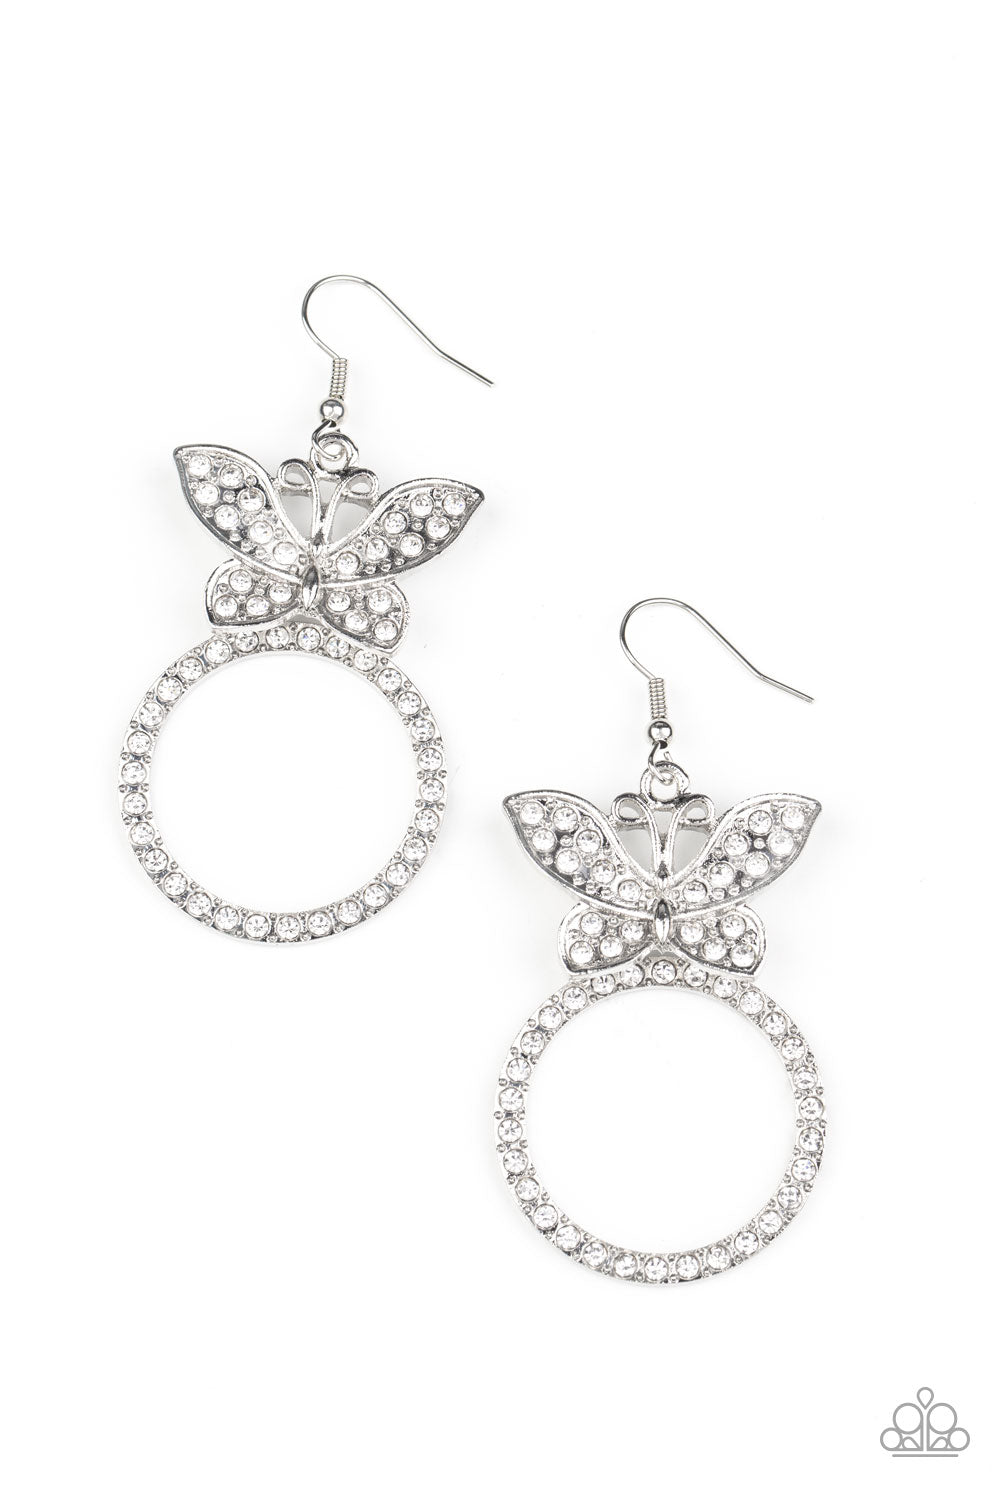 Paradise Found - White Rhinestone Earrings - Paparazzi Accessories - GlaMarous Titi Jewels